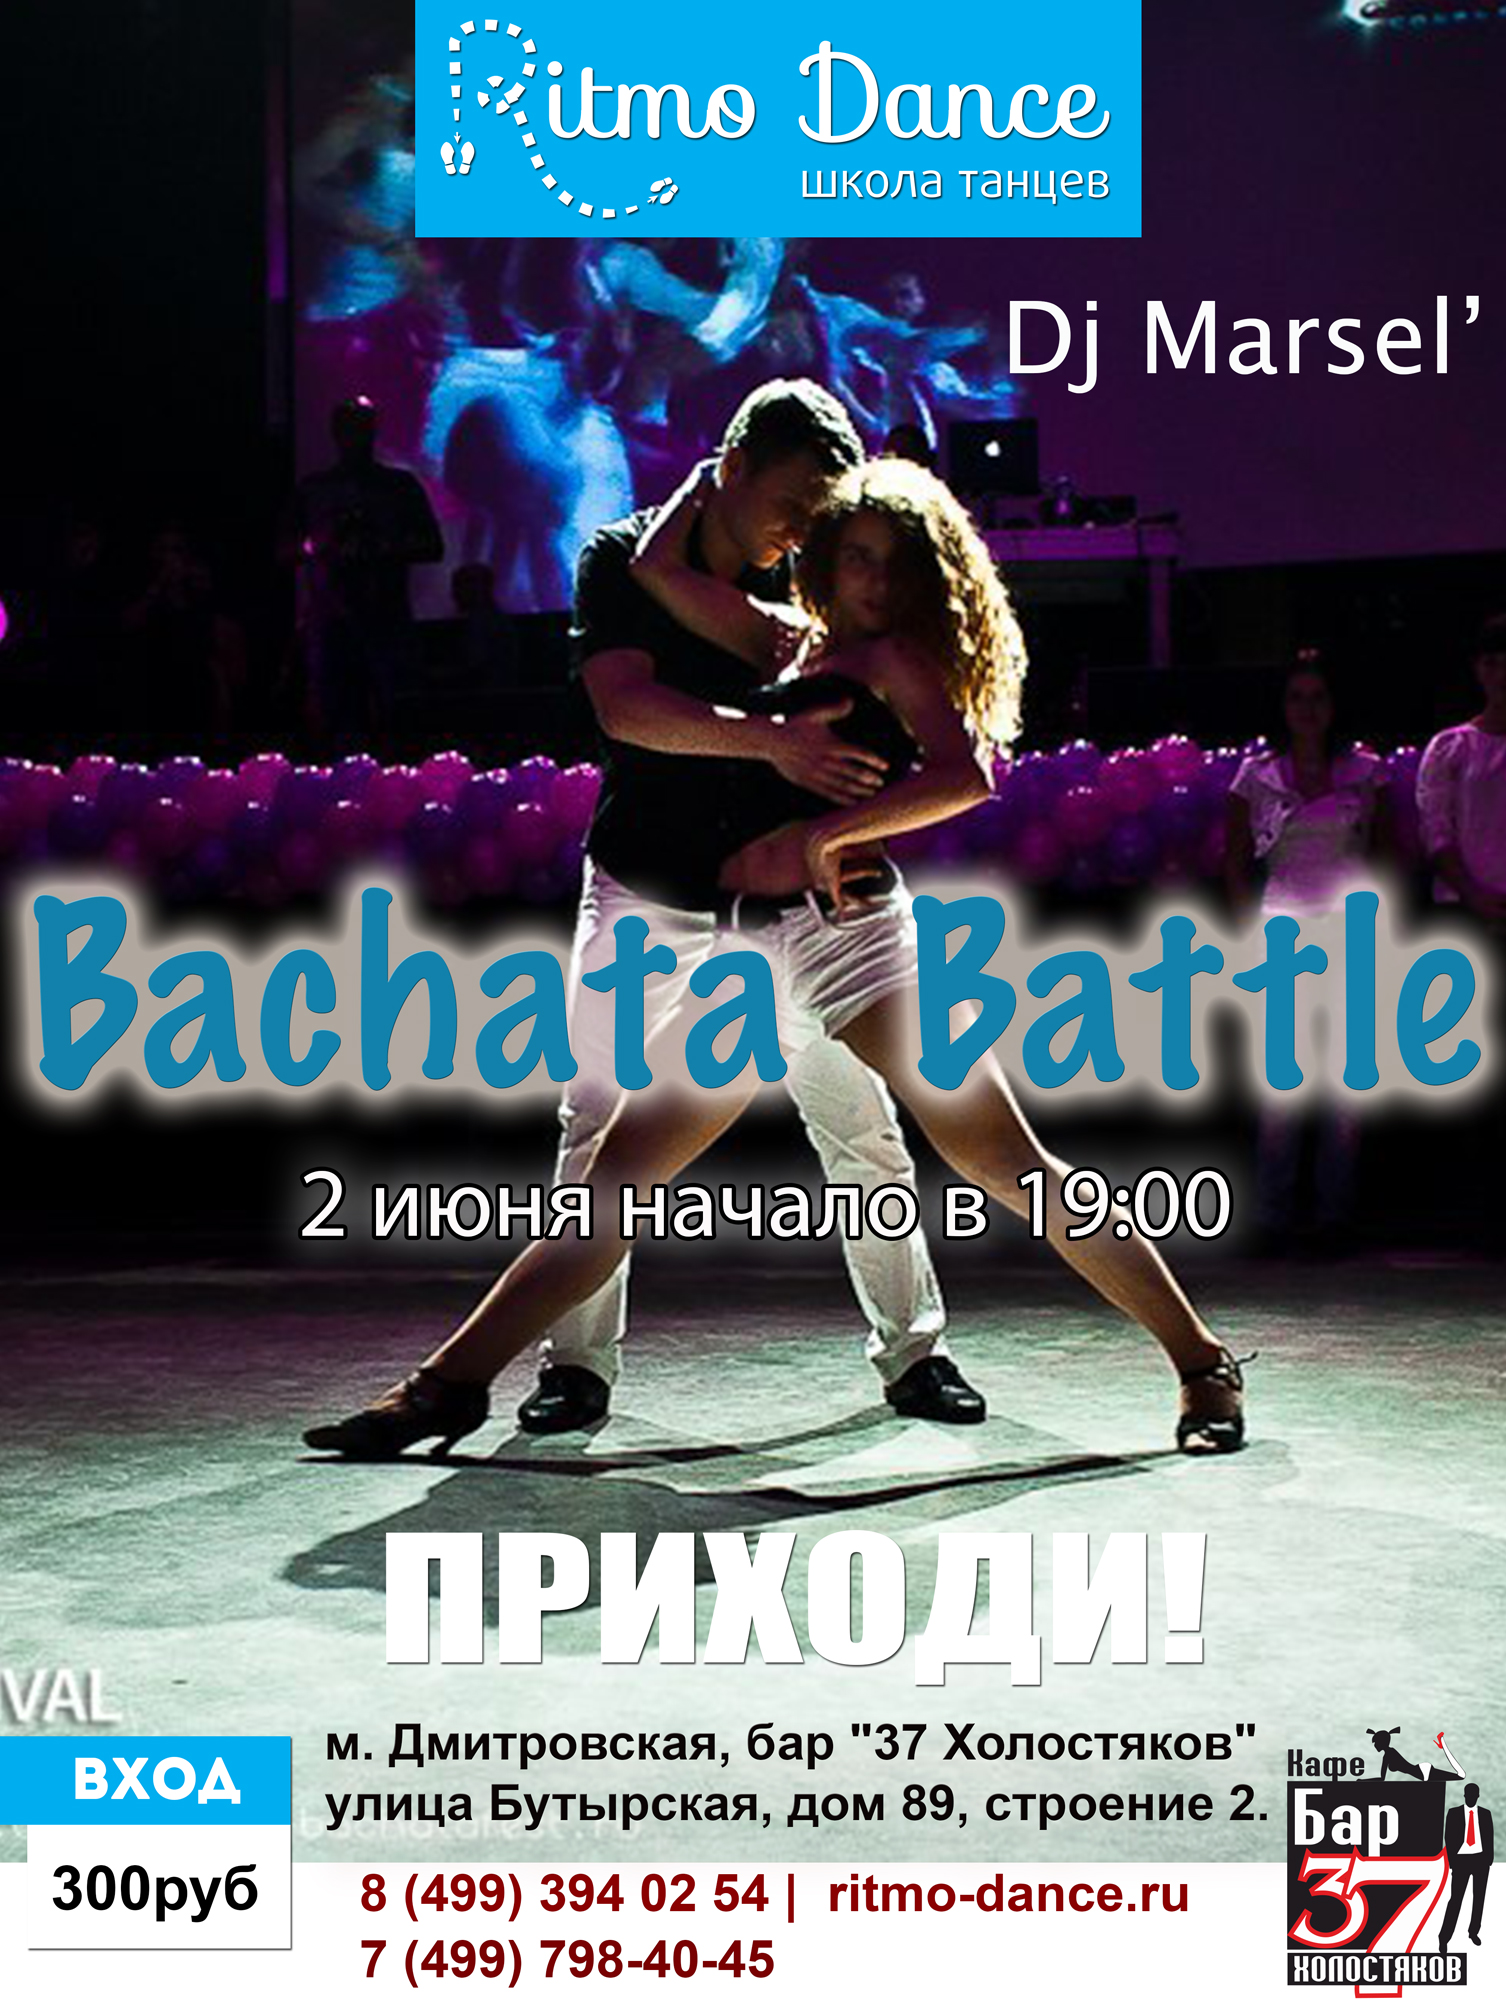 Ritmo Dance школа. Танцевальный батл бачата. Школа танцев кизомба в Москве. Танцы СПБ.